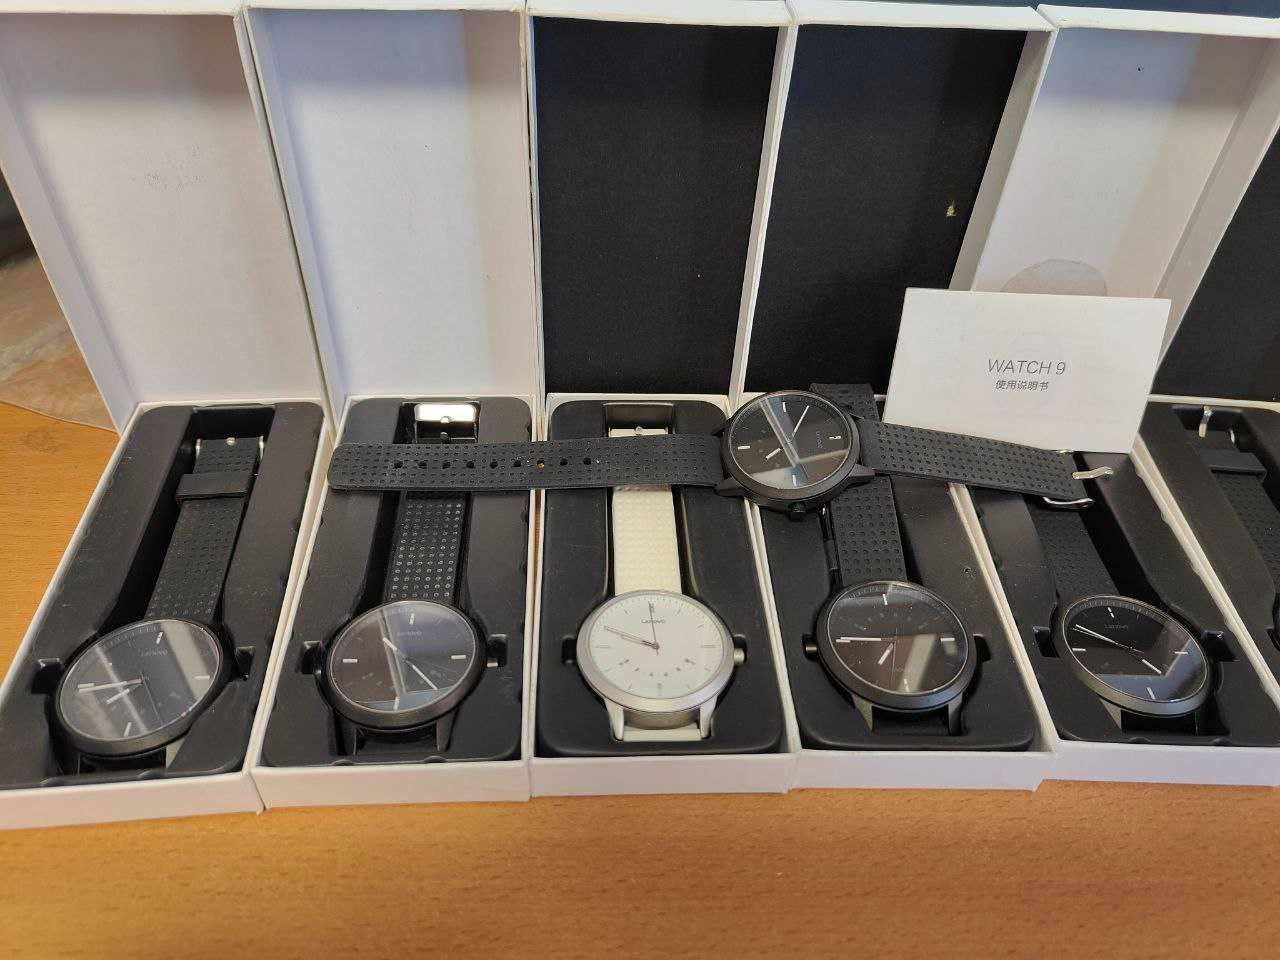 Гібридний Smart-годинник Lenovo Watch 9 Одним лотом за 6 штук